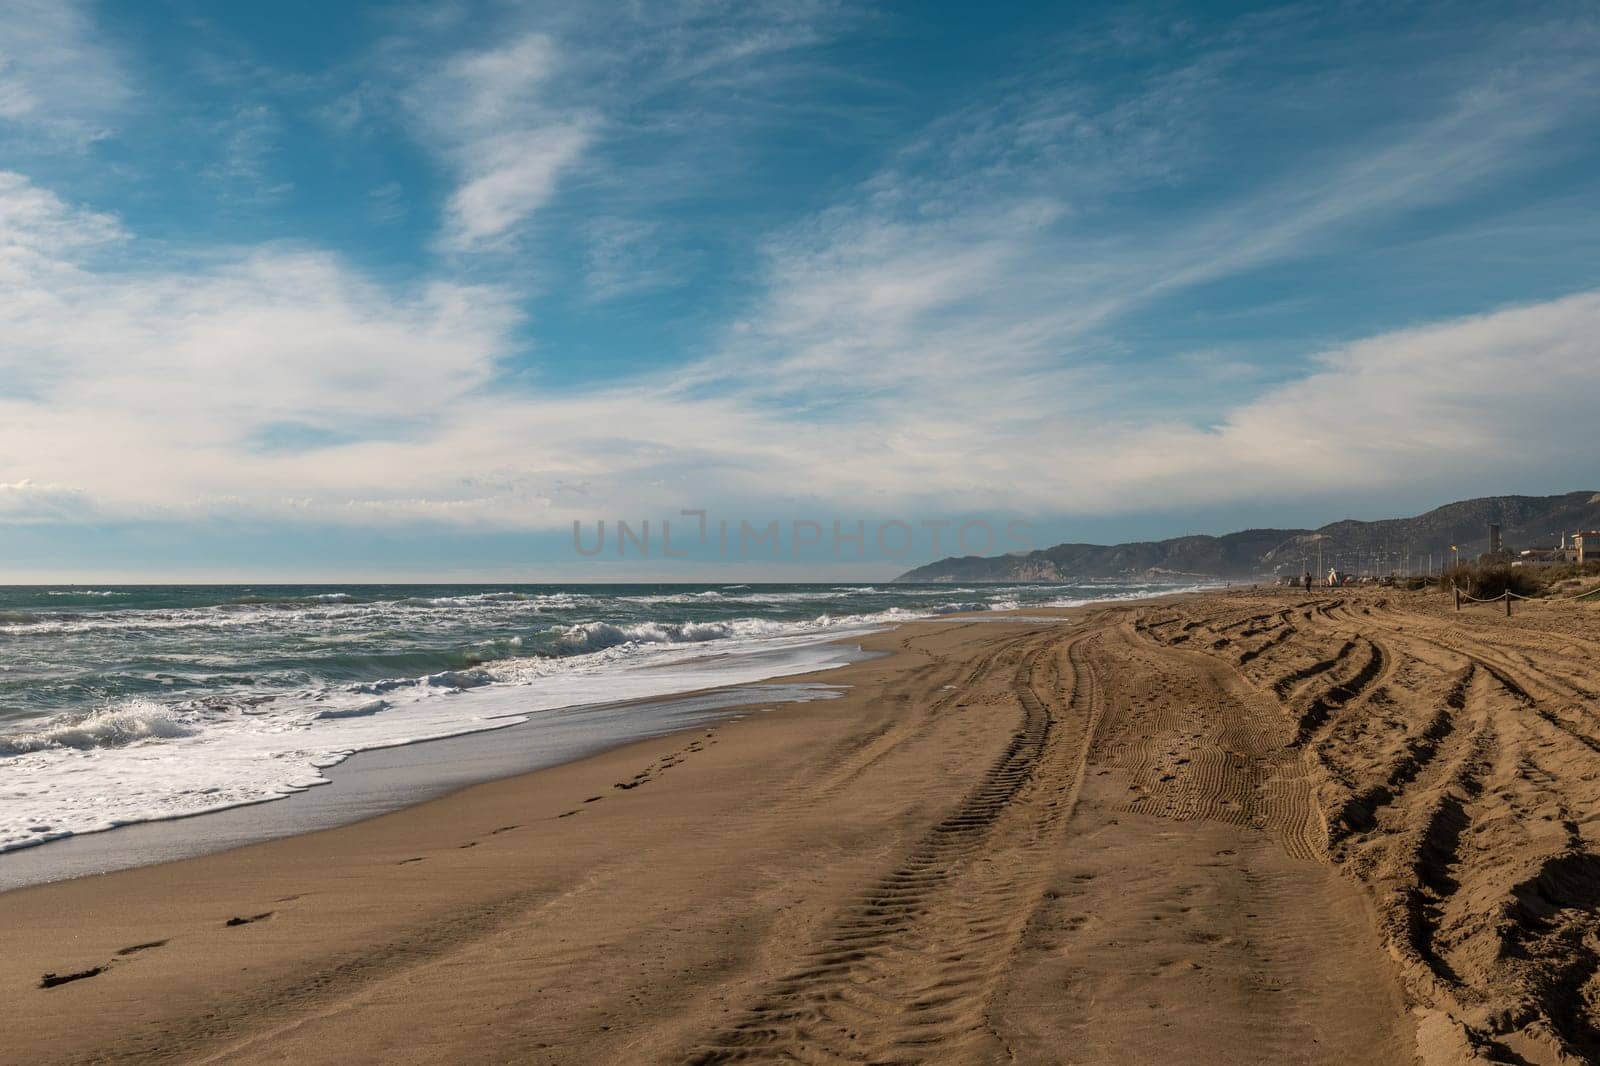 Deserted Sandy Beach with Foamy Waves and Tire Tracks under a Vast Blue Sky by apavlin